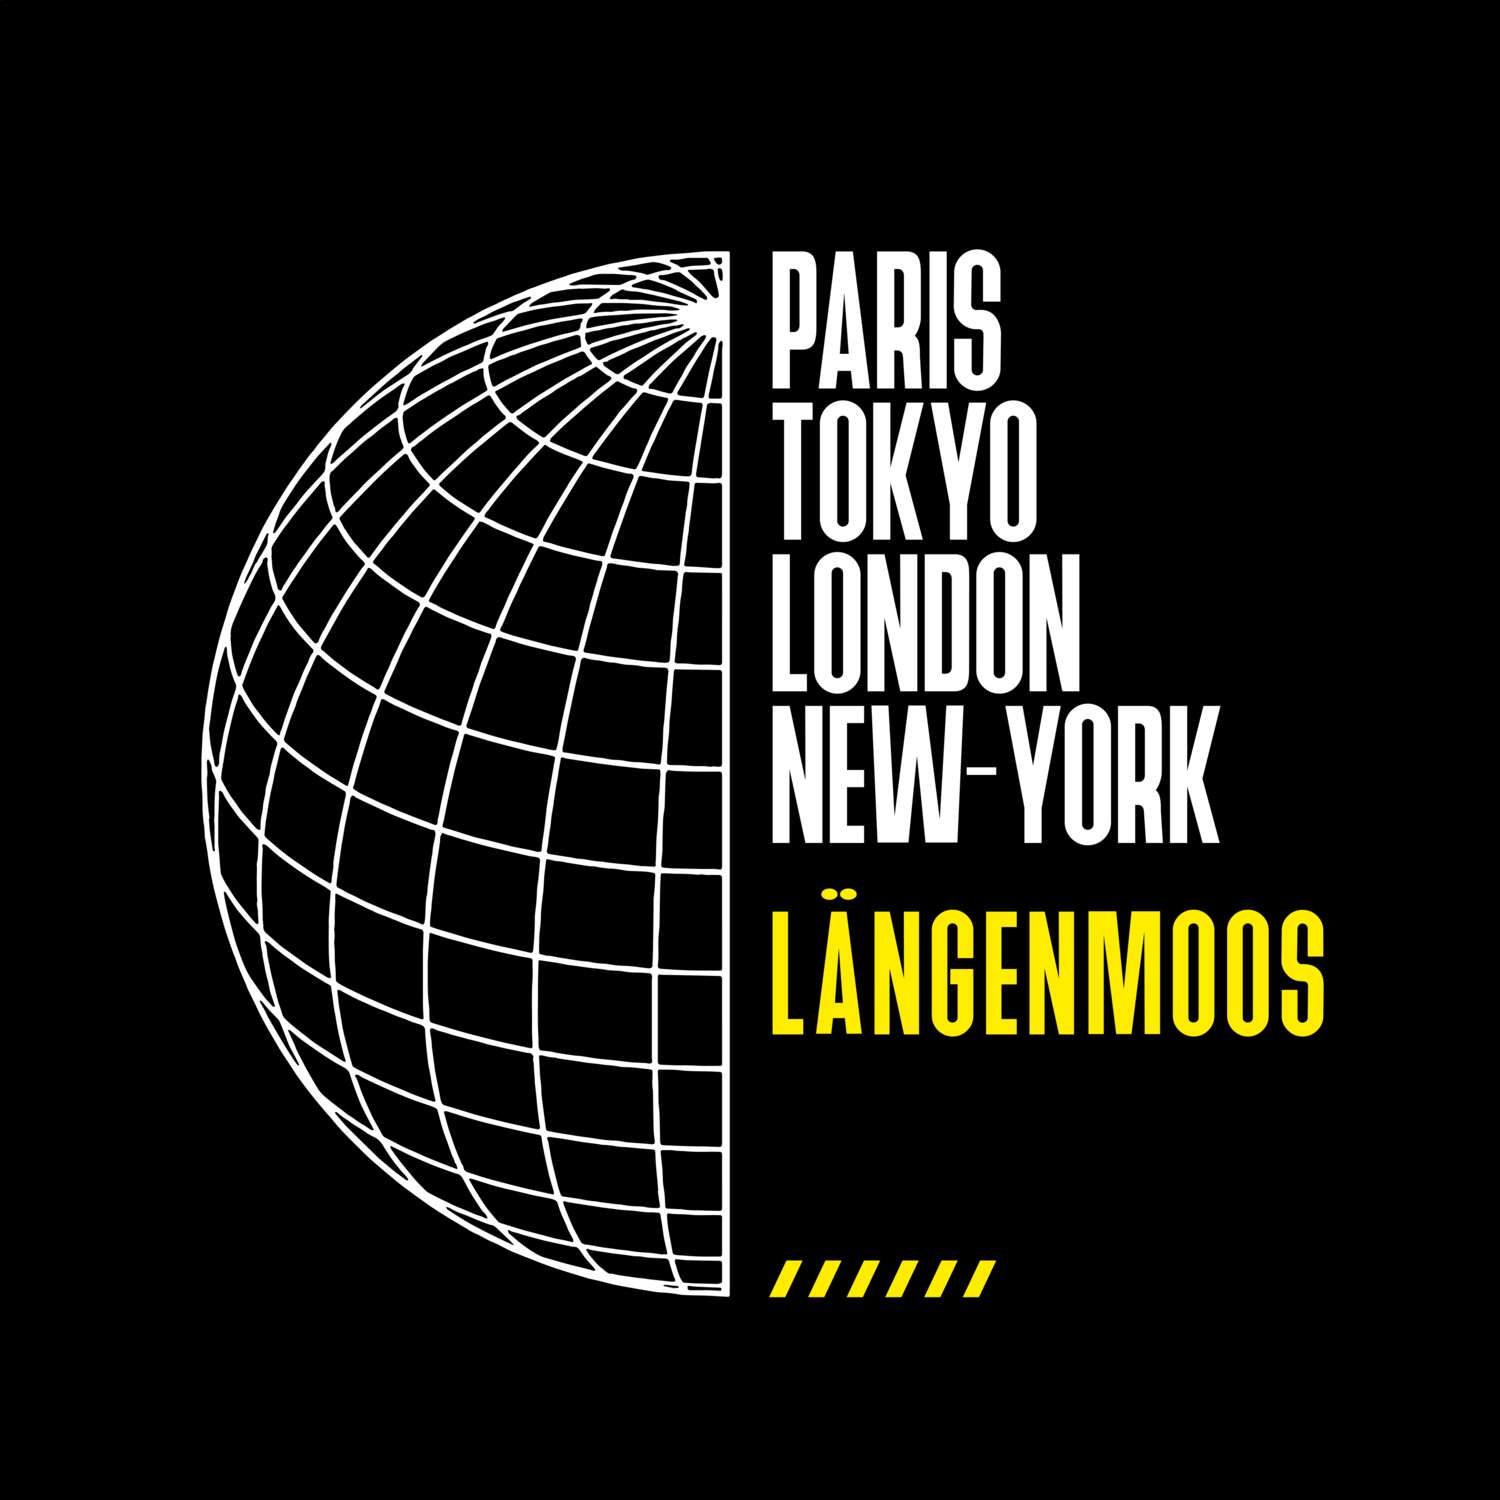 Längenmoos T-Shirt »Paris Tokyo London«